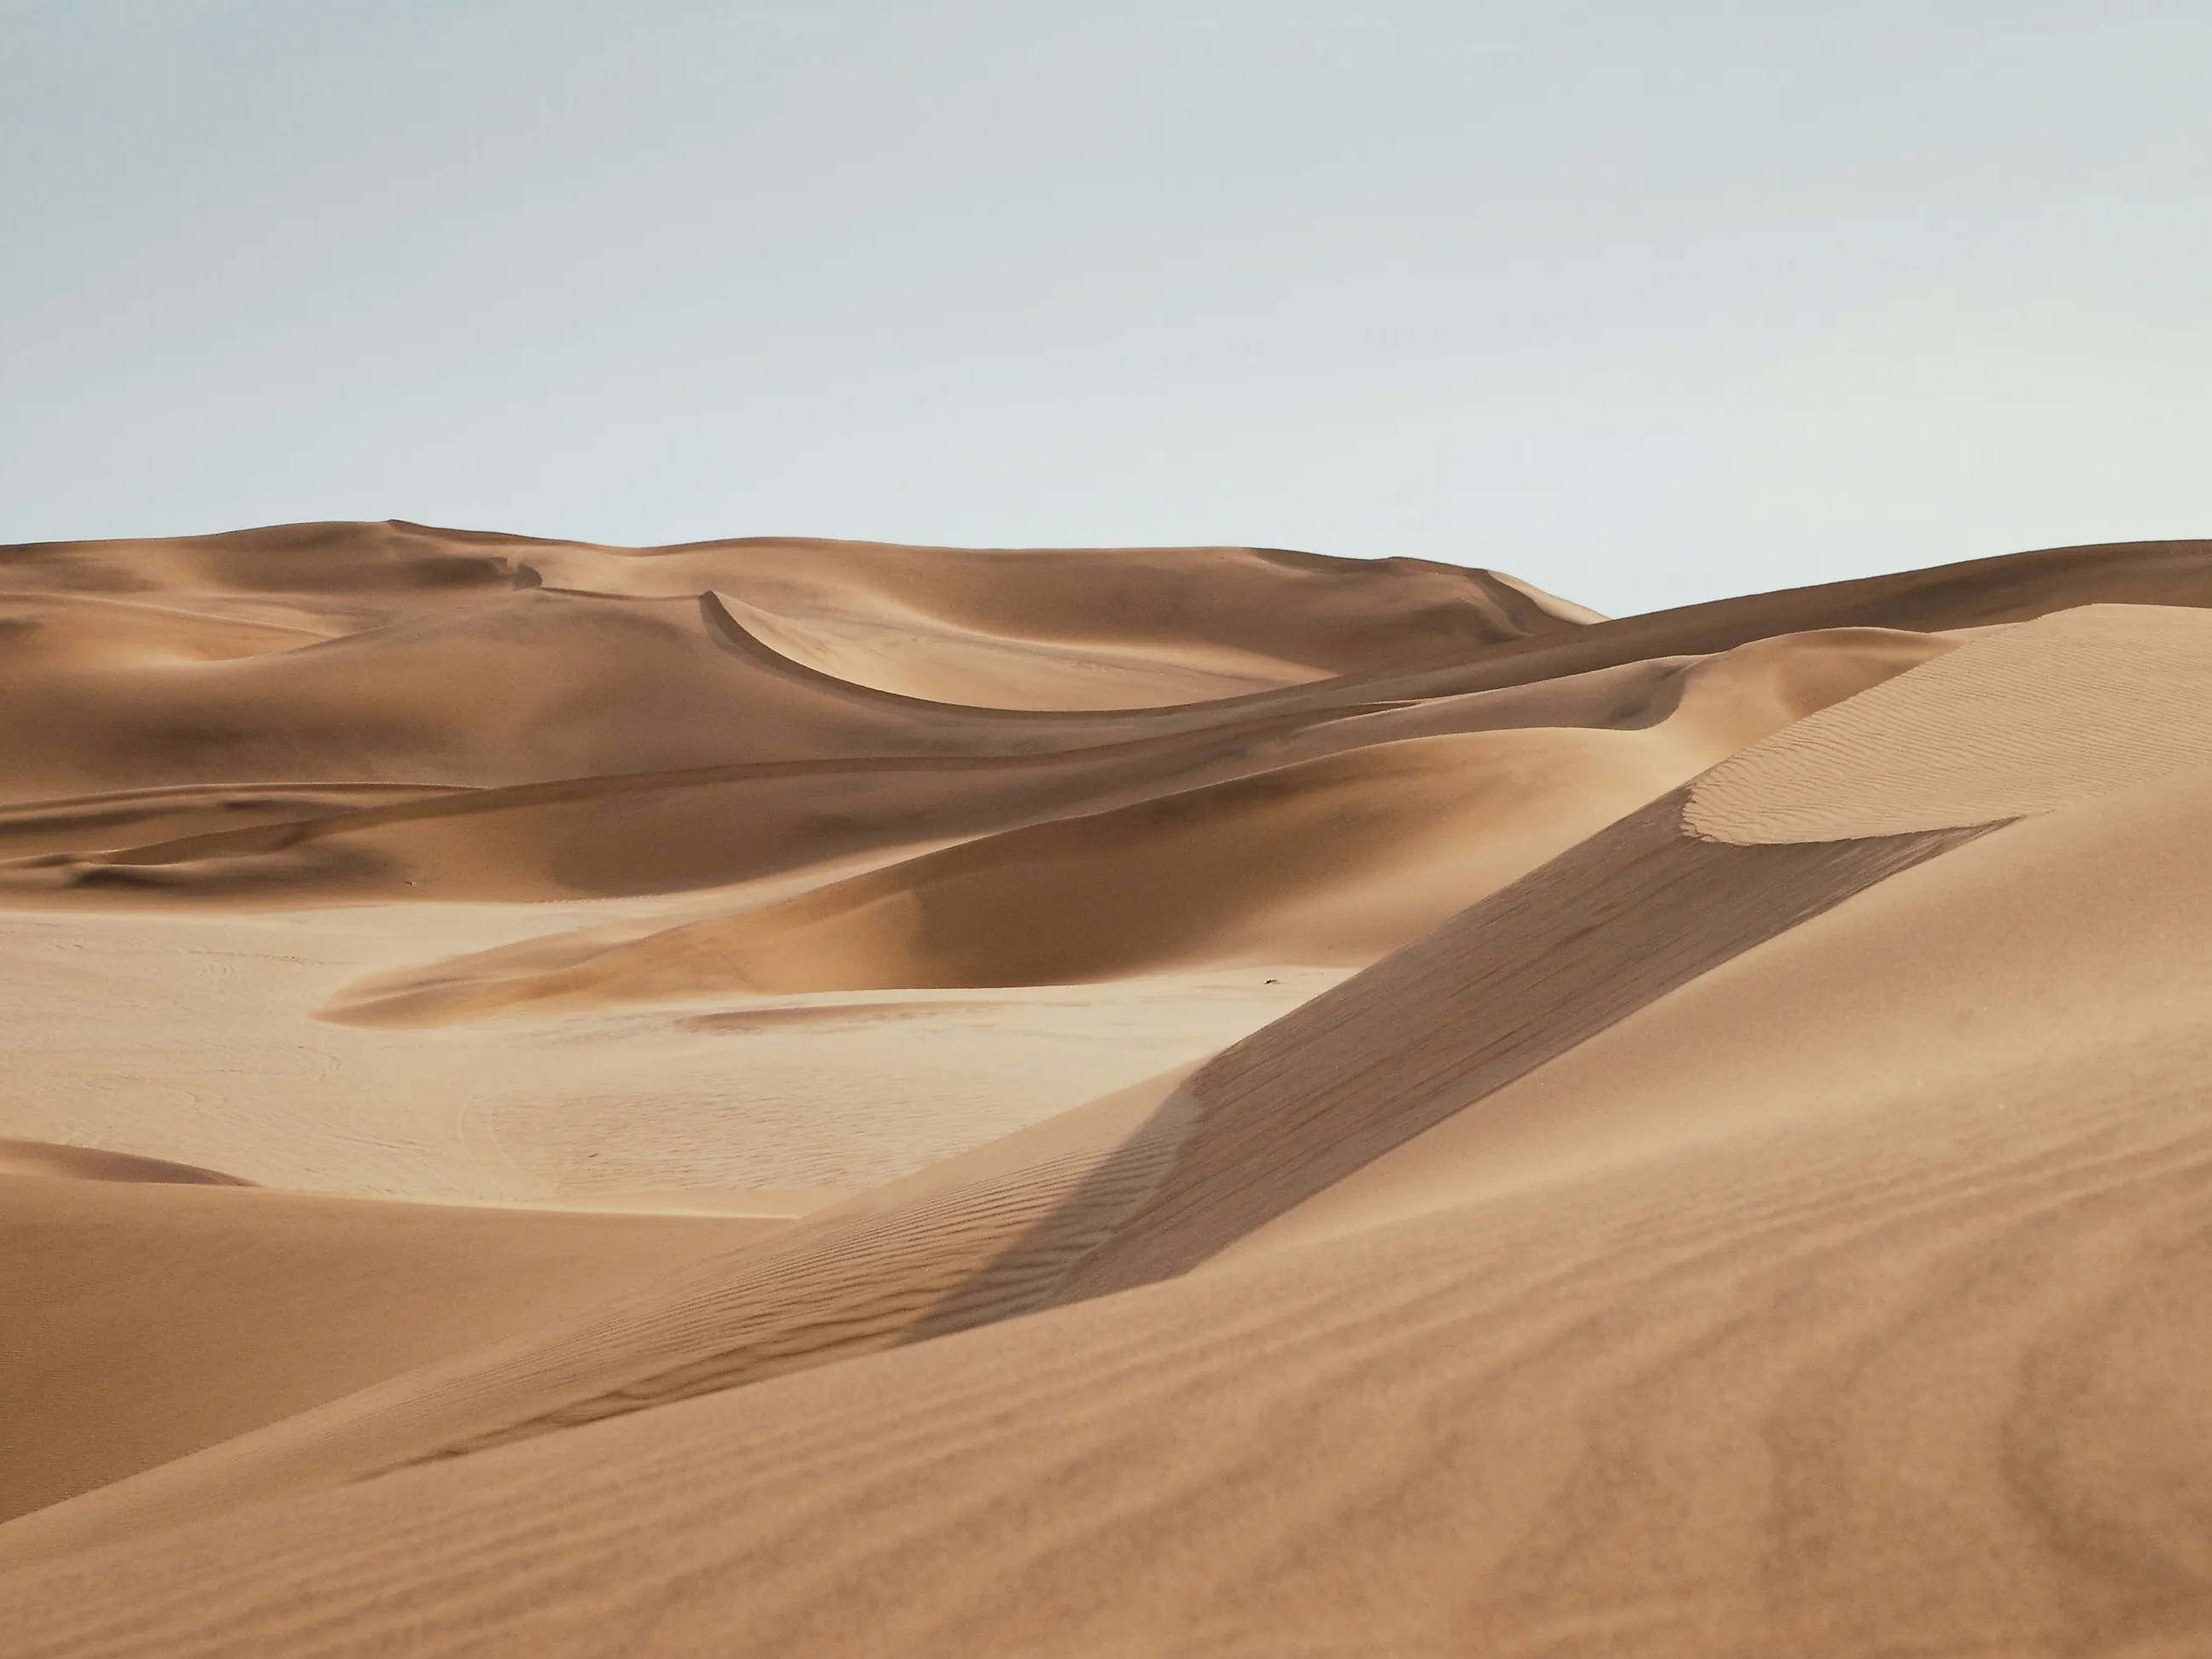 Expansive sand dunes